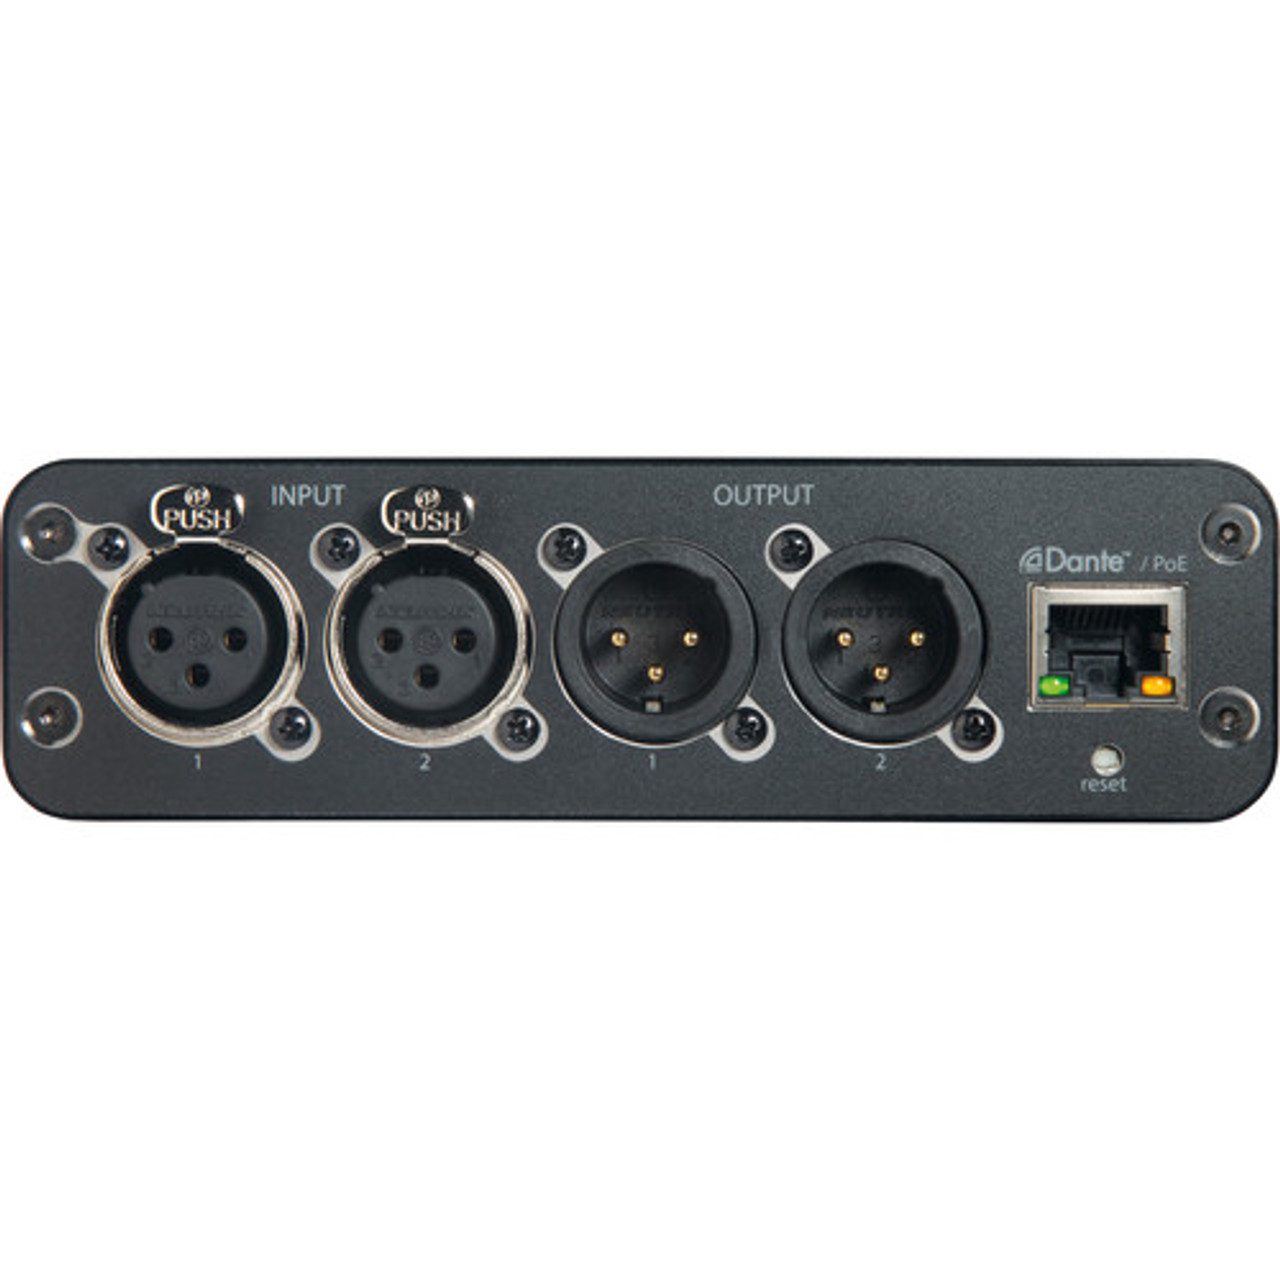 Shure ANI22-XLR Audio Network Interface (XLR Connectors) (ANI22-XLR)